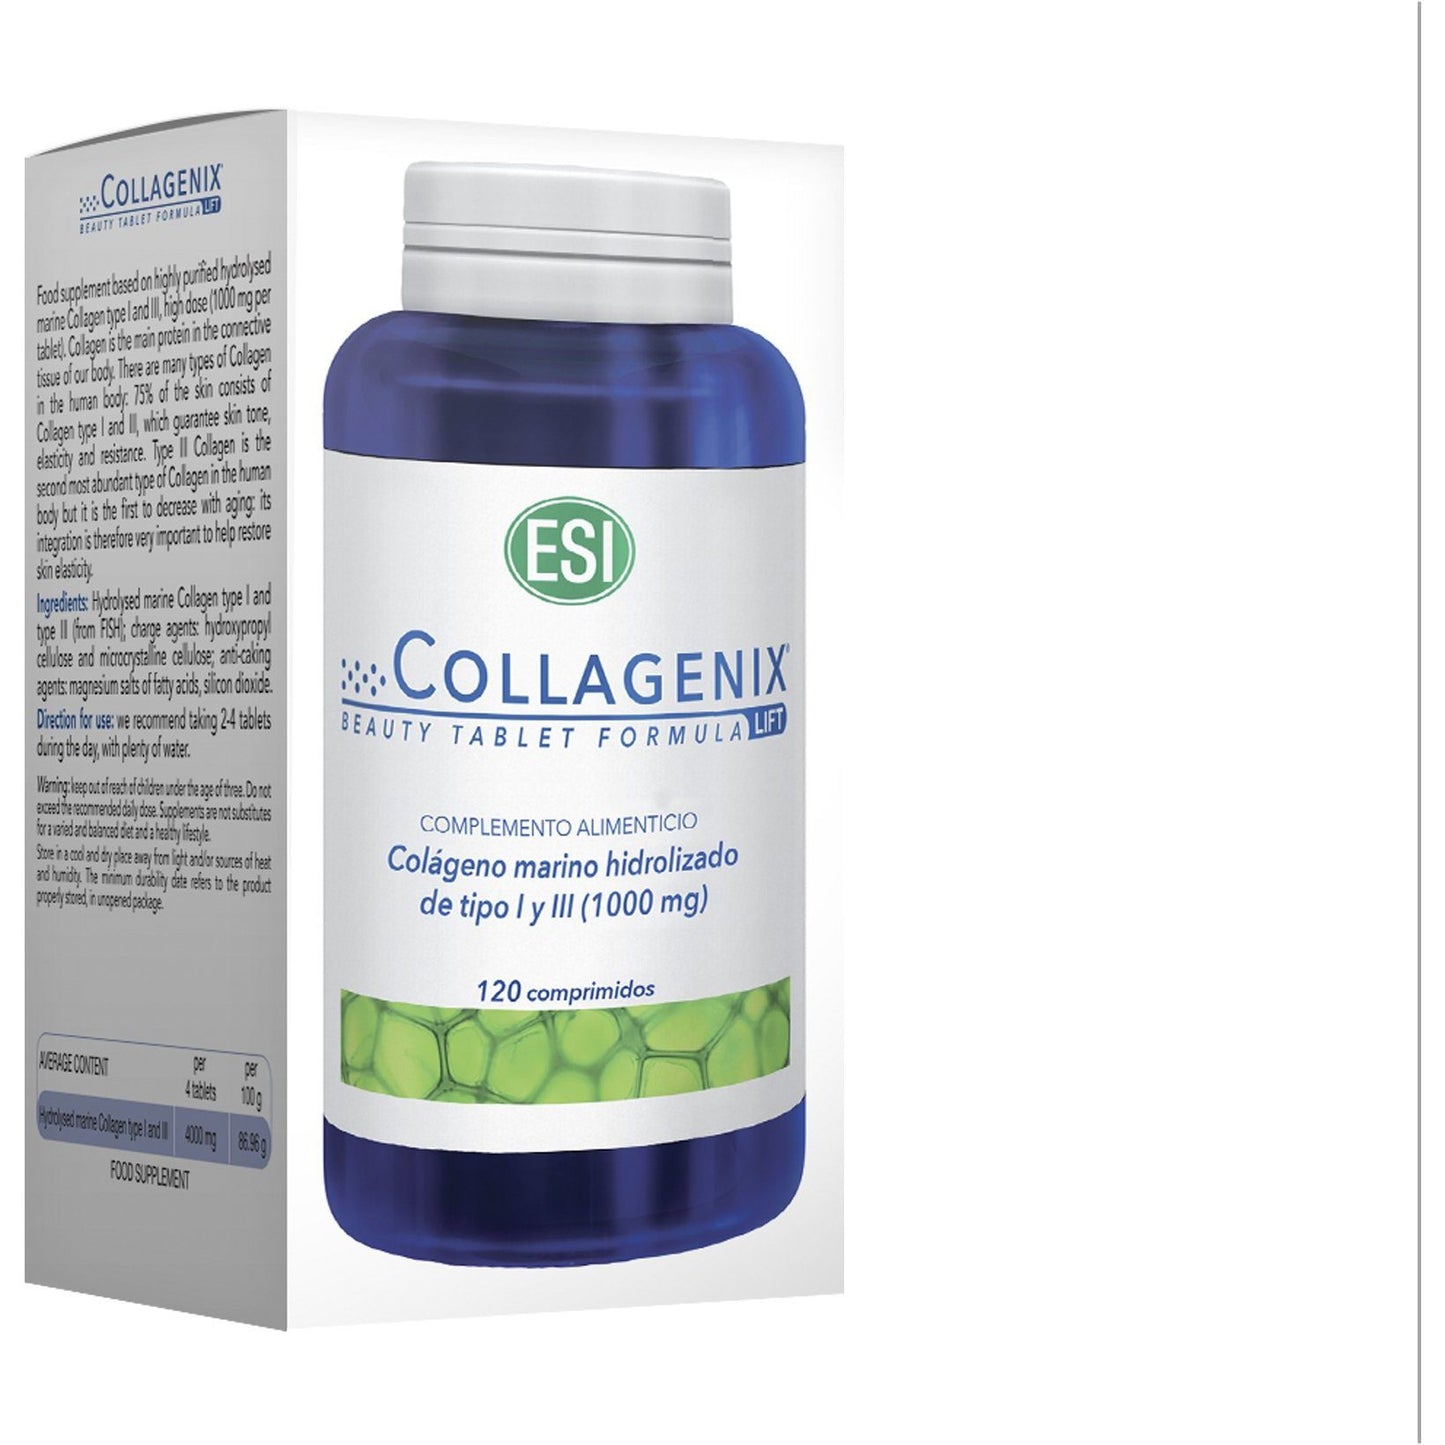 Collagenix 120 Comprimidos | Trepat Diet - Dietetica Ferrer